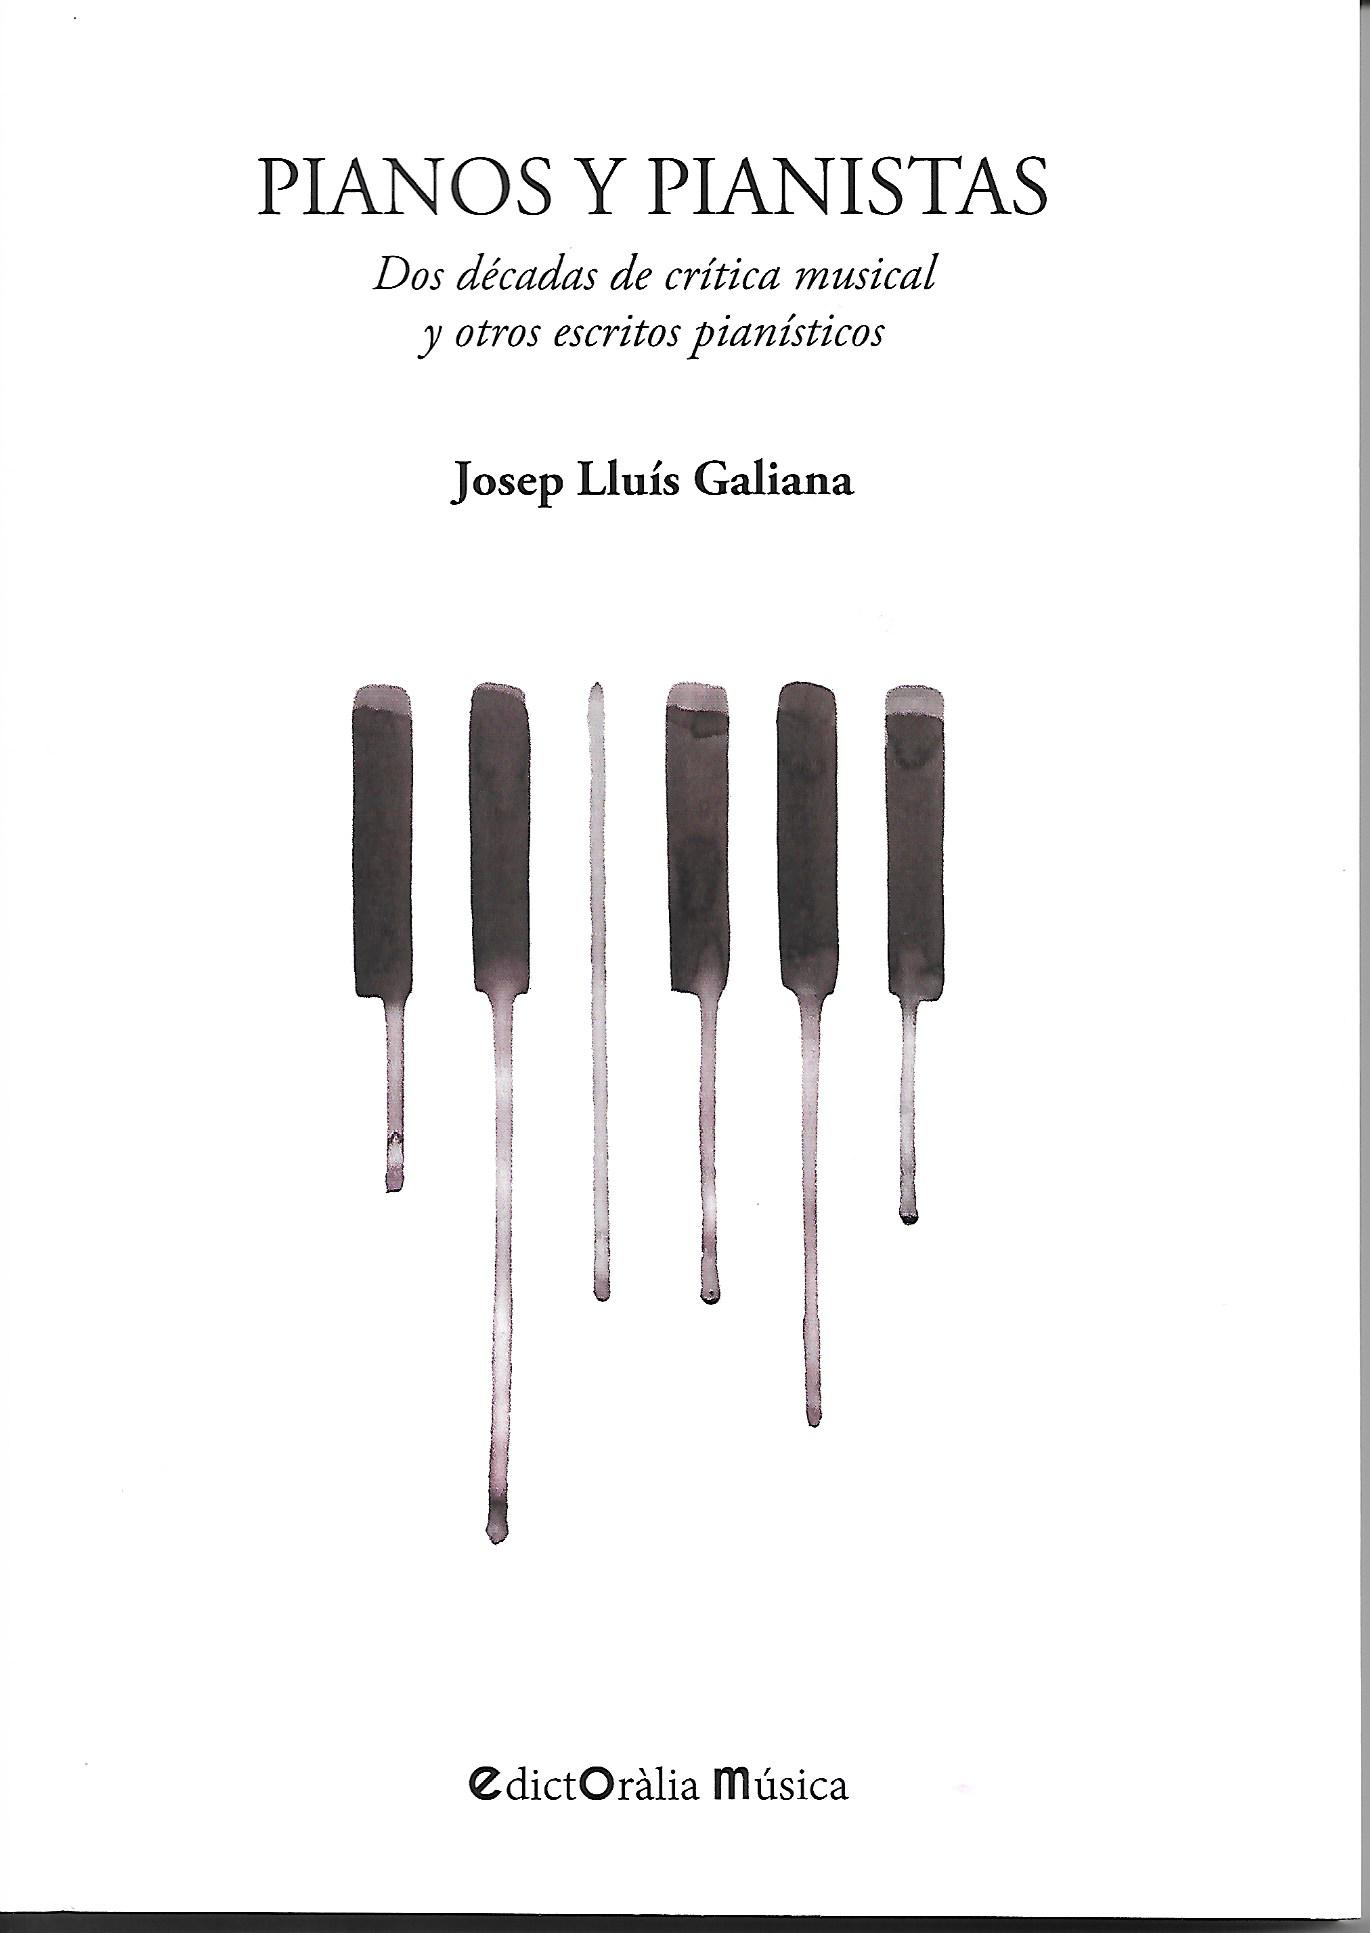 Pianos i pianistas segons Josep Lluis Galiana